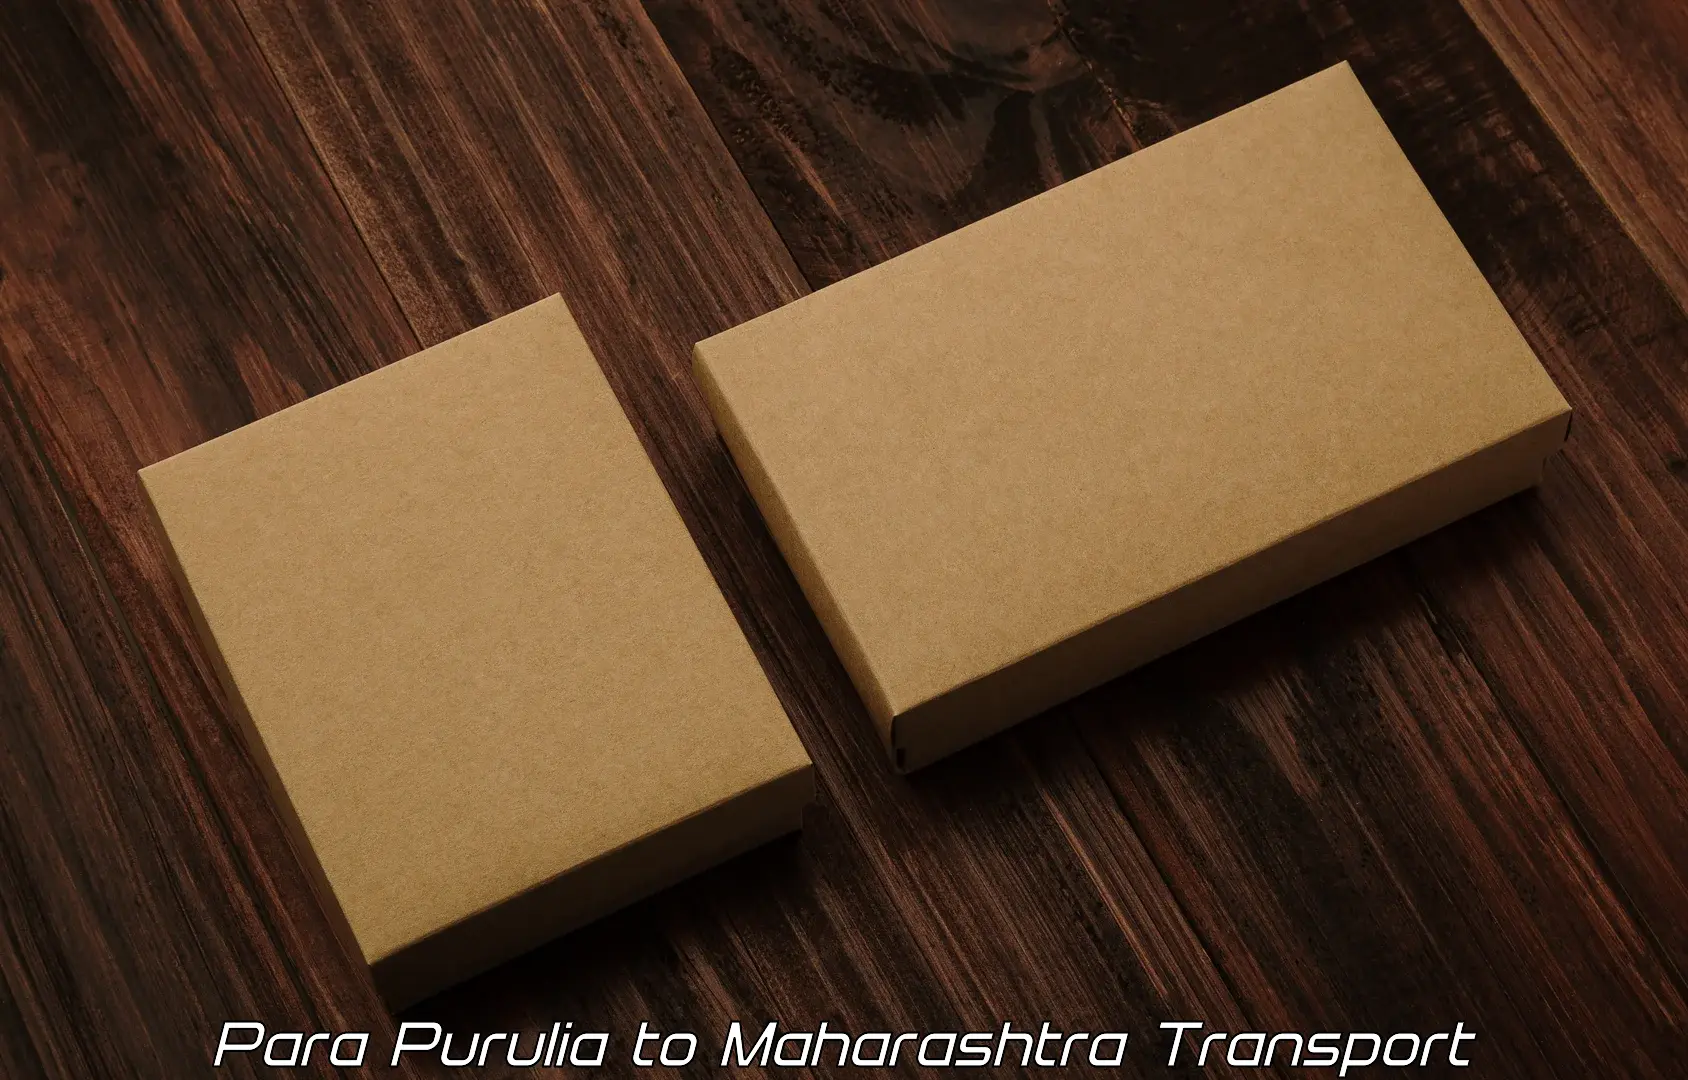 Nearby transport service Para Purulia to Nandura